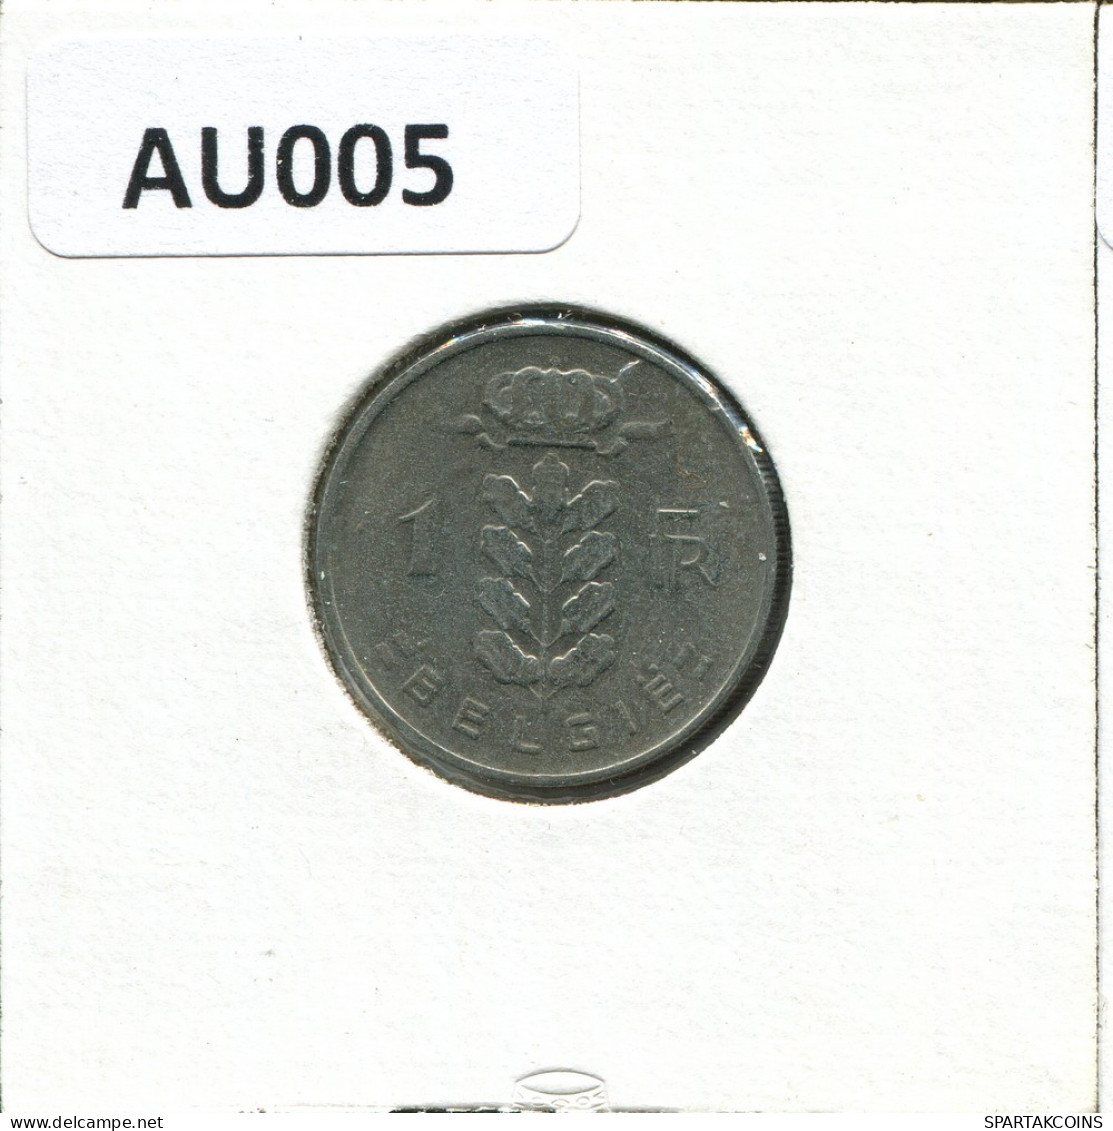 1 FRANC 1966 DUTCH Text BELGIQUE BELGIUM Pièce #AU005.F.A - 1 Franc